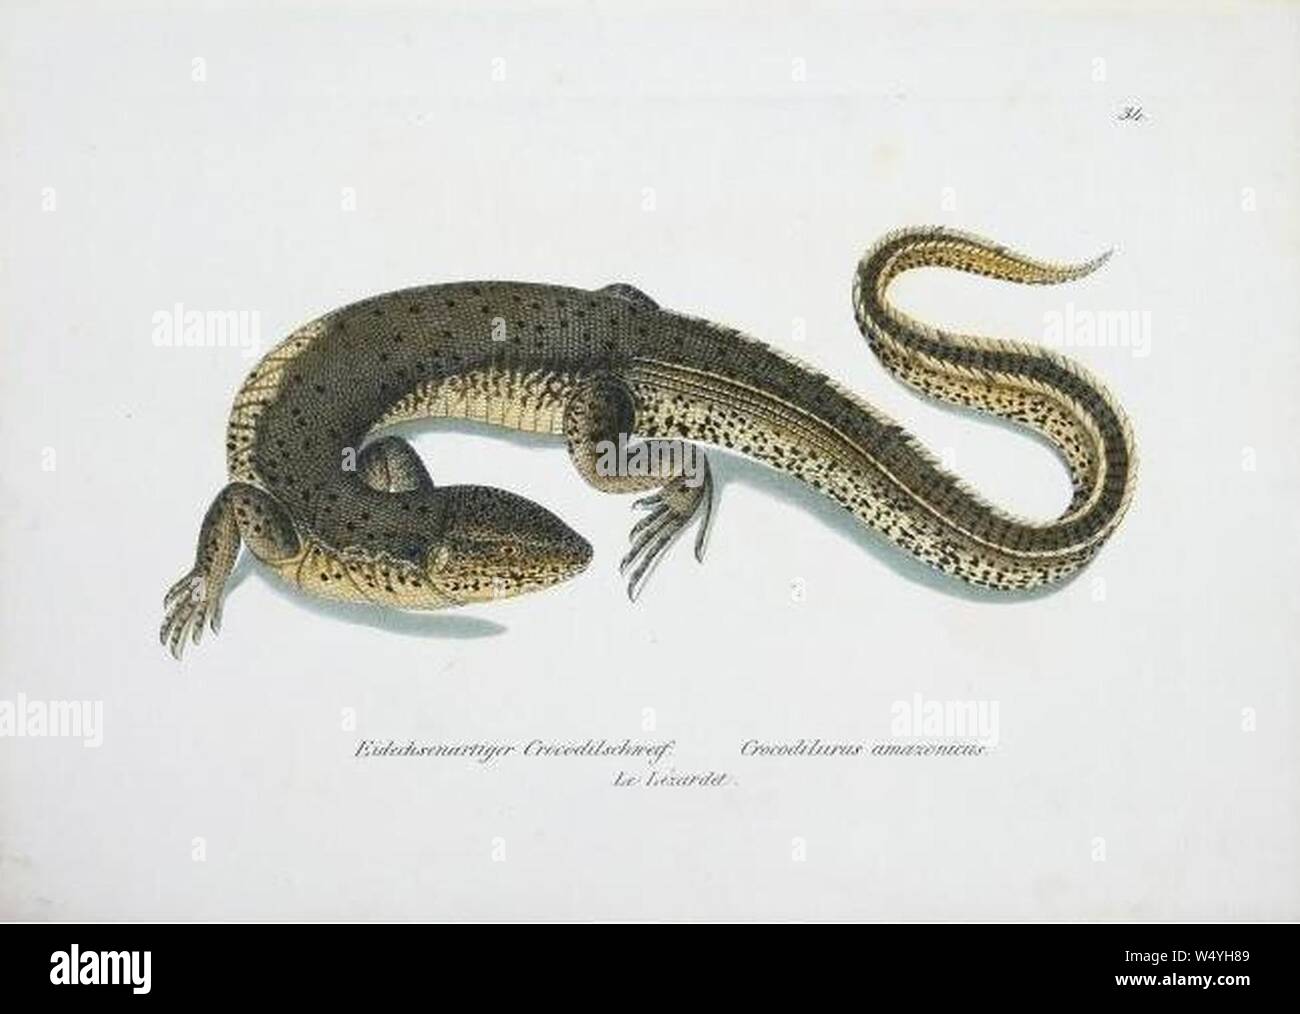 Crocodilurus amazonicus Schinz. Stock Photo